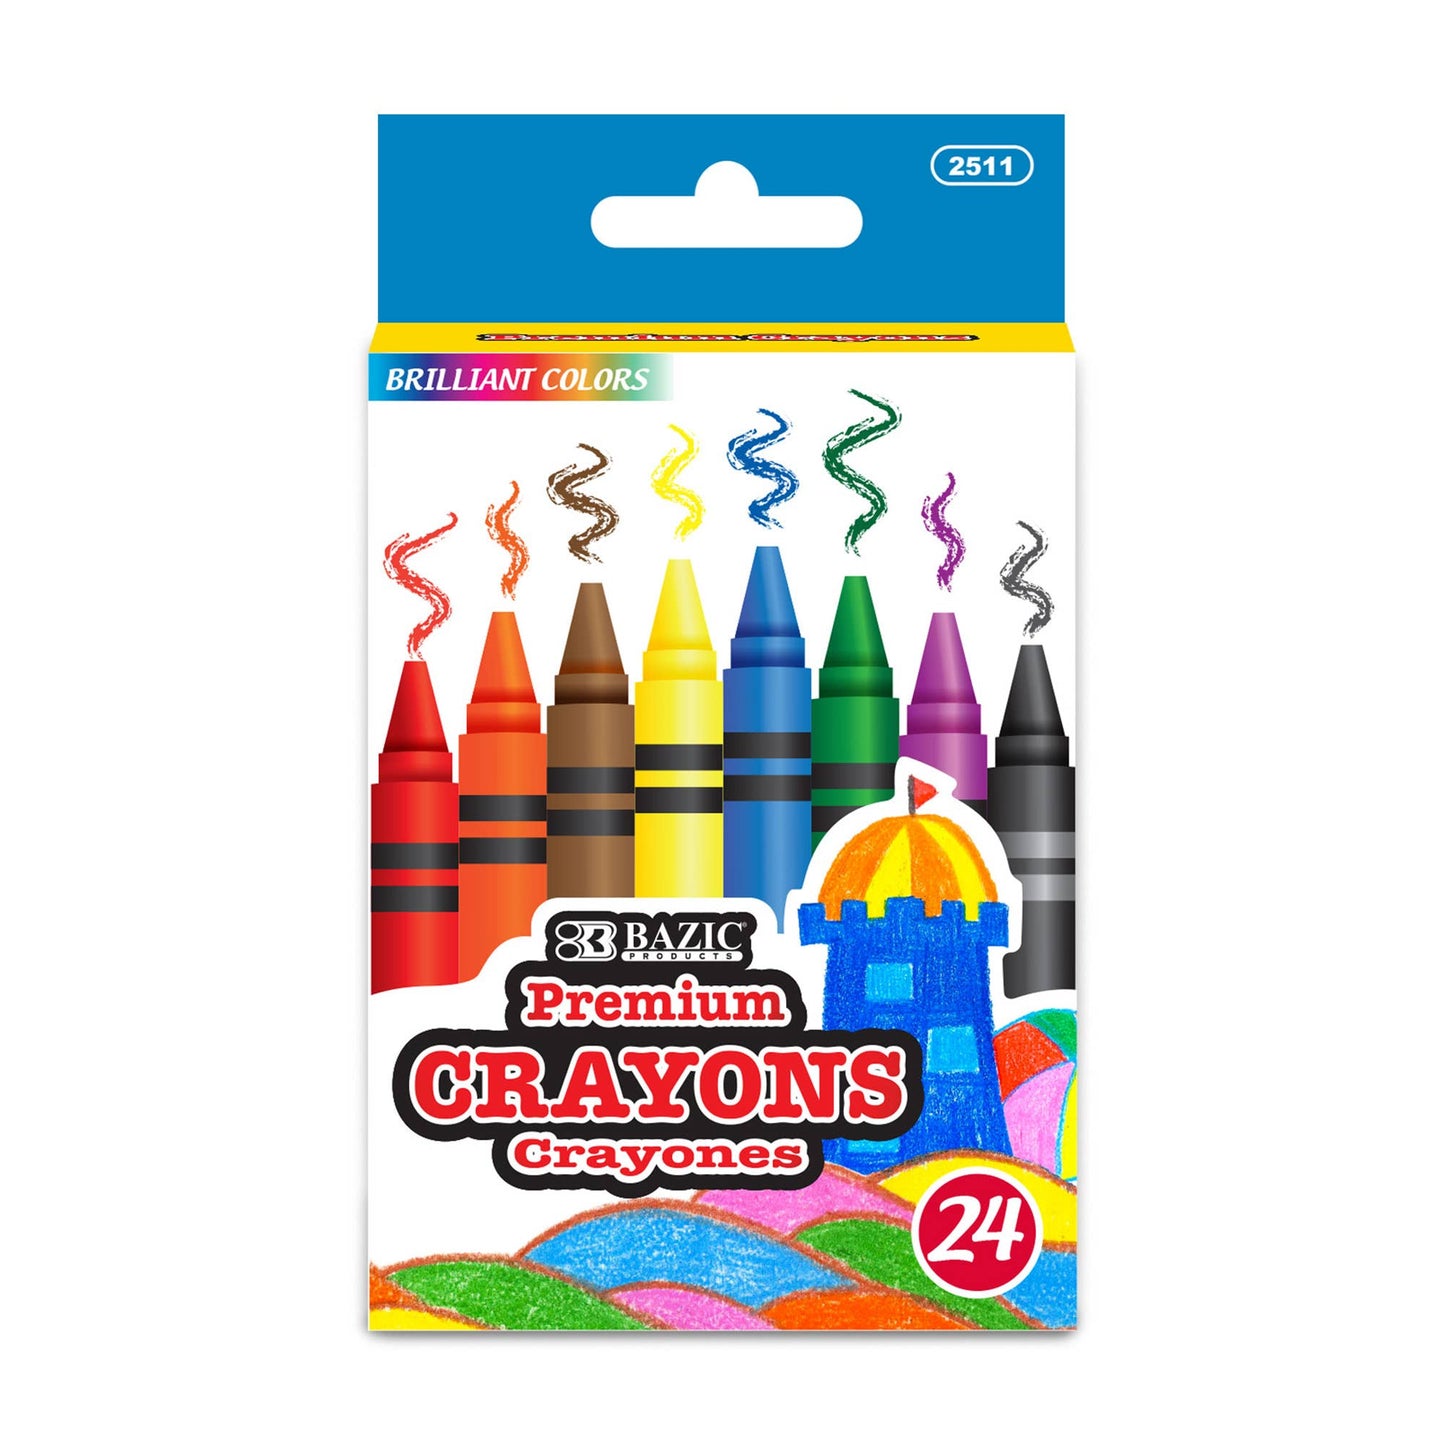 BAZIC Products - Premium Crayons 24 Color